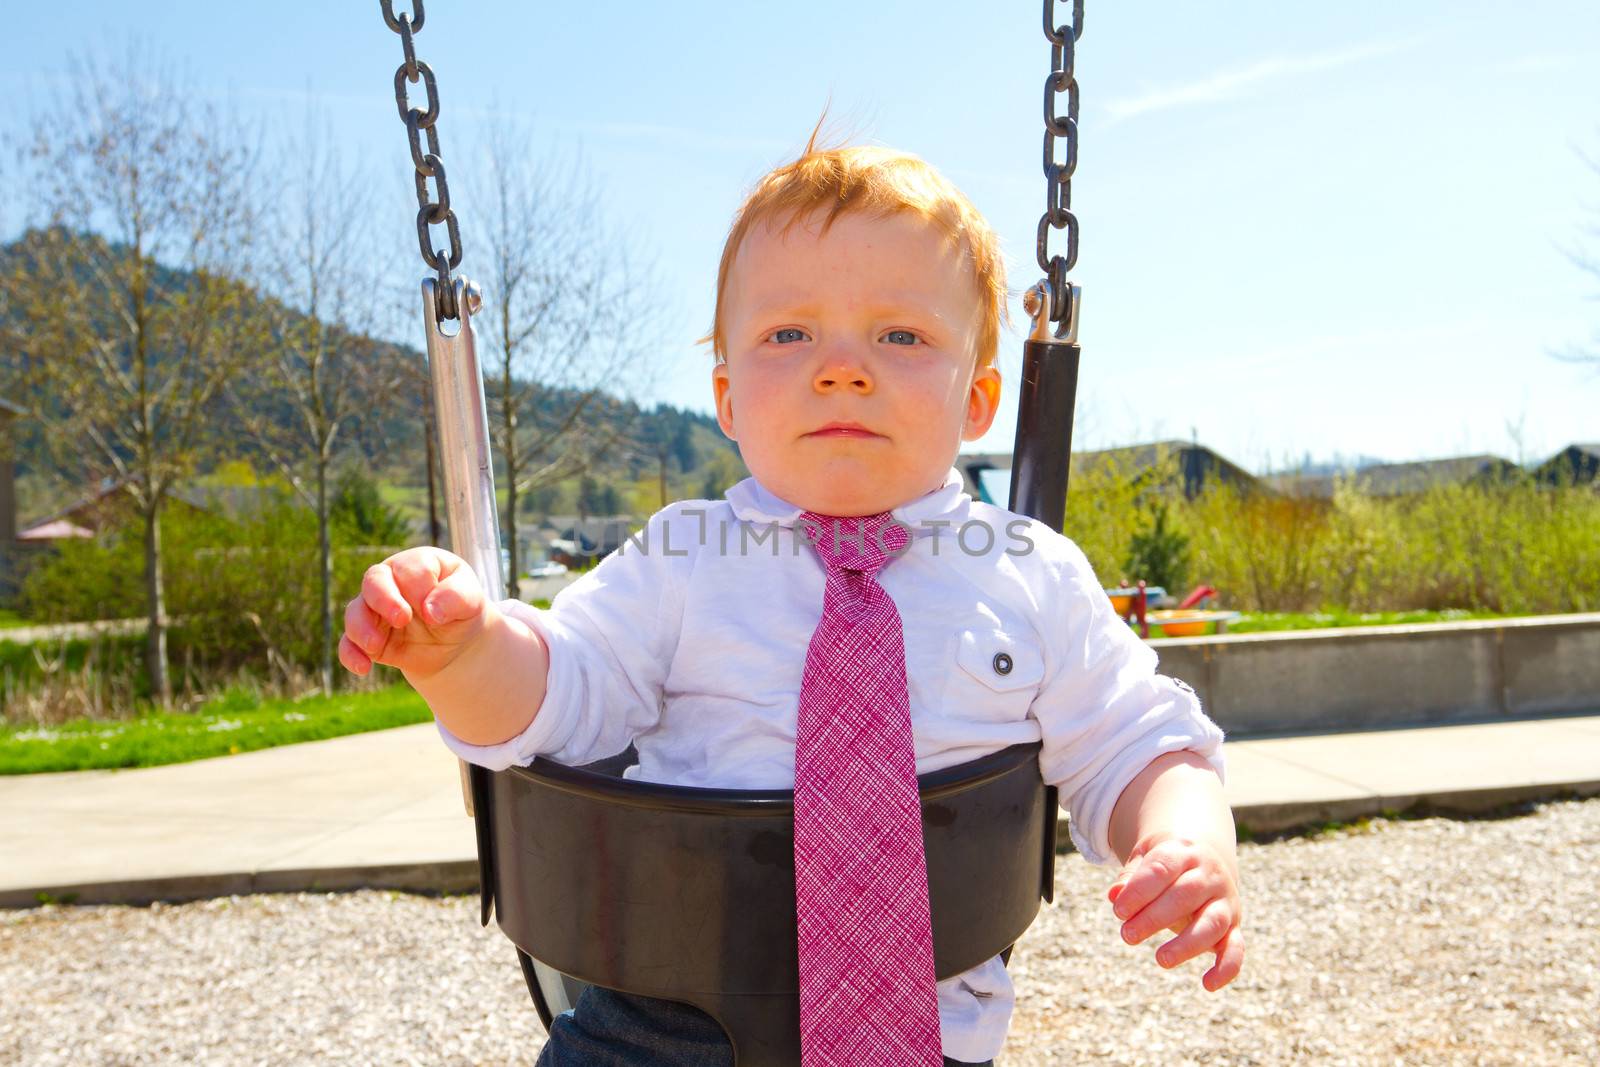 One Year Old Swinging by joshuaraineyphotography